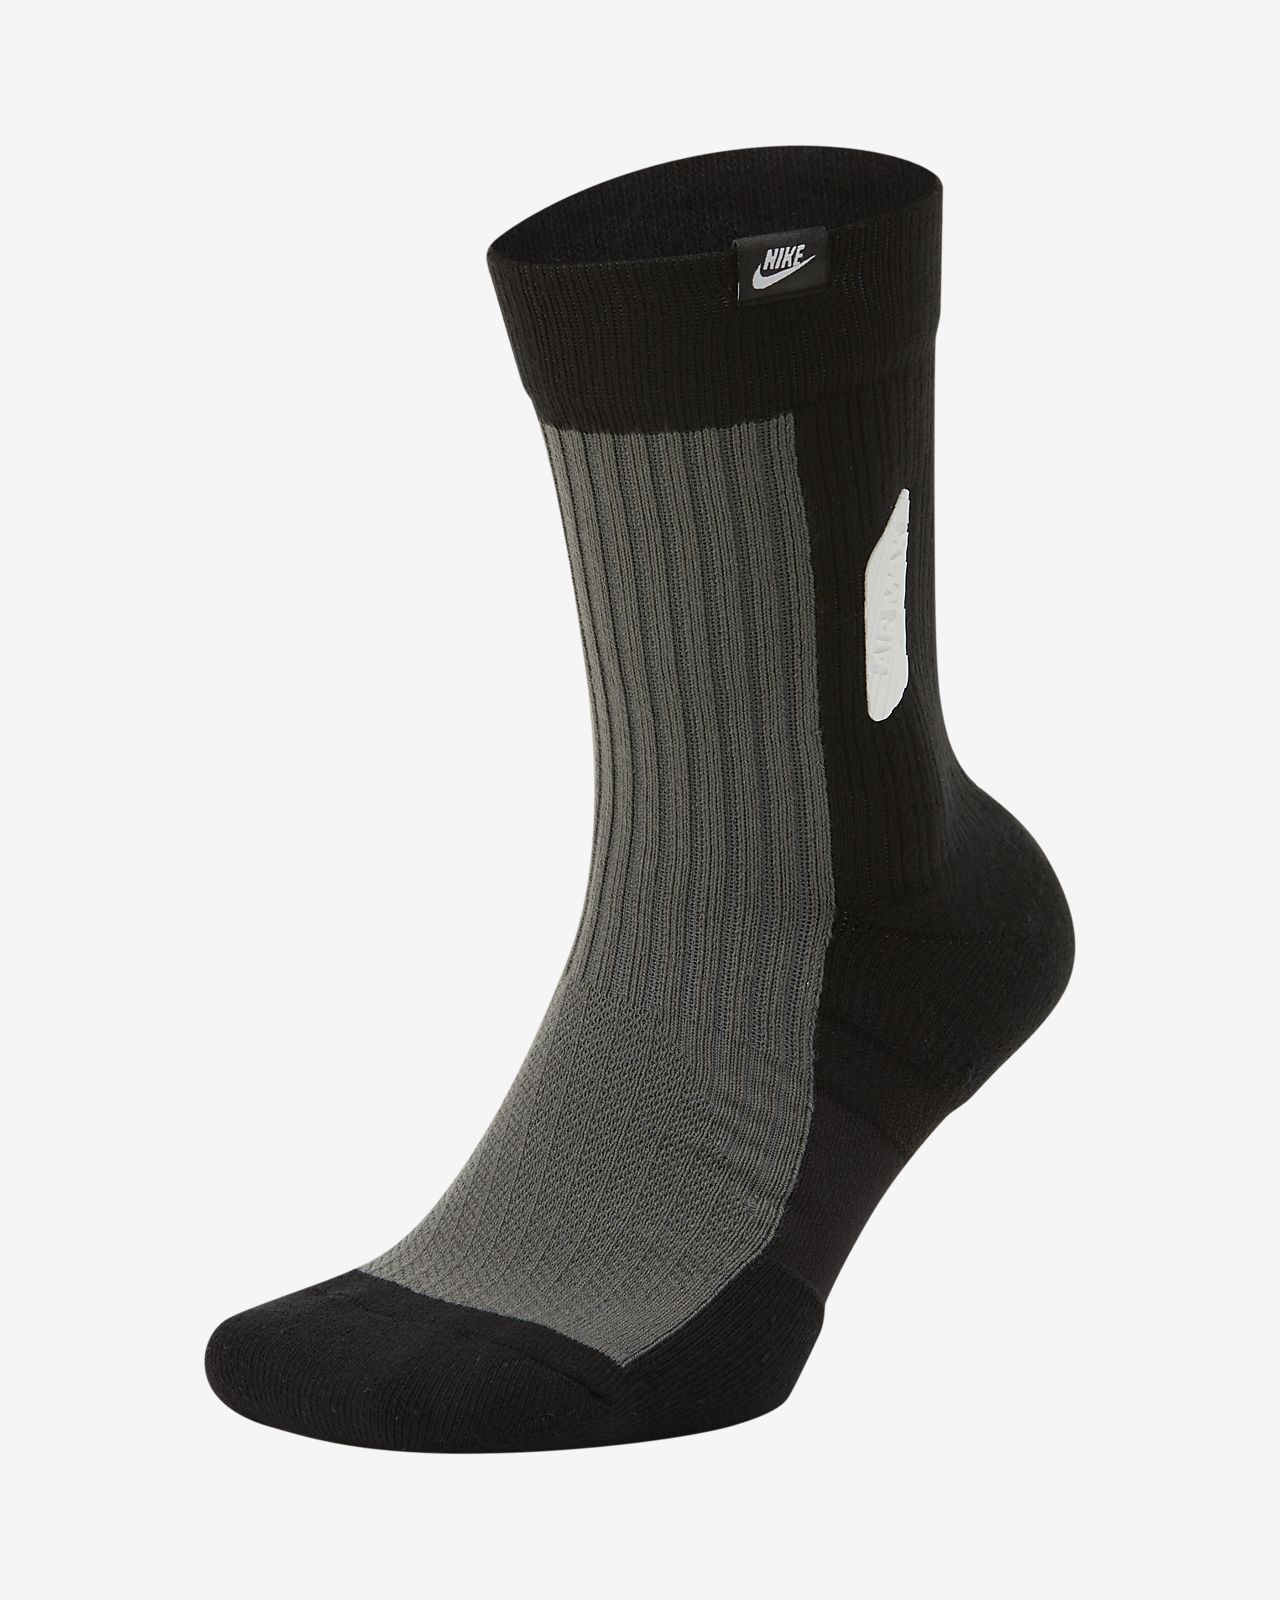 socks for air max 90 1